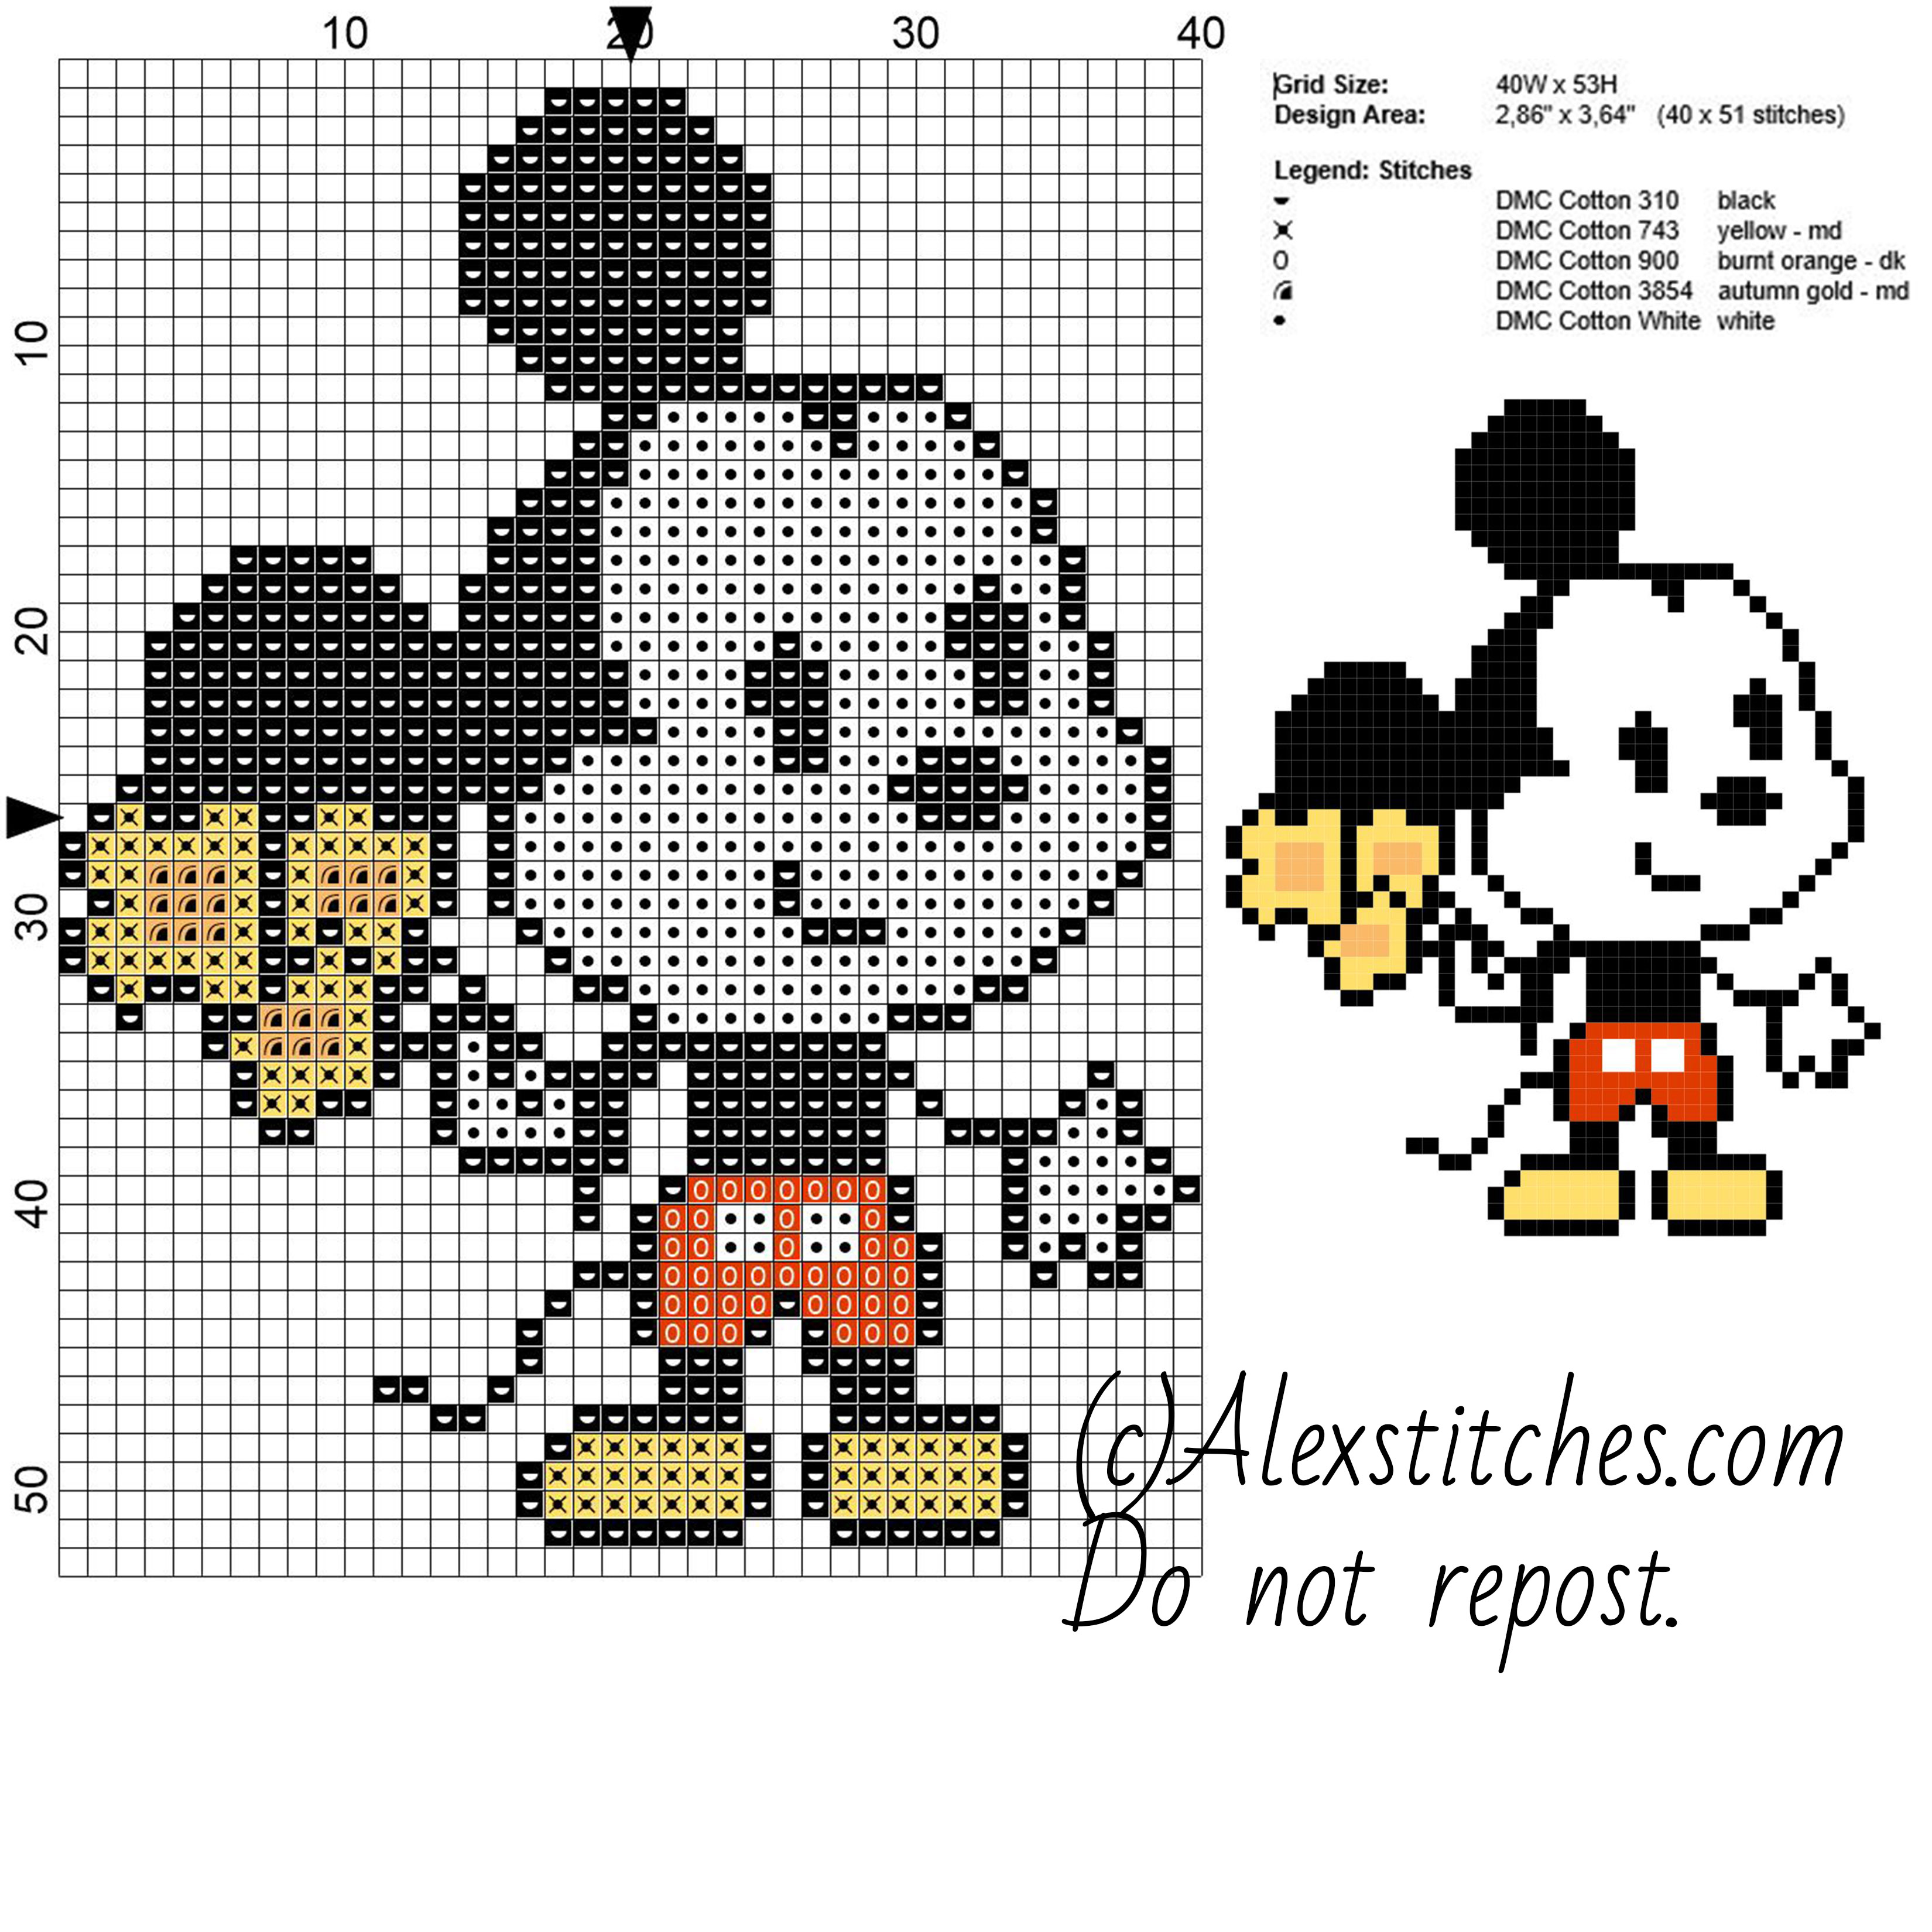 Mickey Mouse Disney Cuties free cross stitch pattern 40x53 5 colors